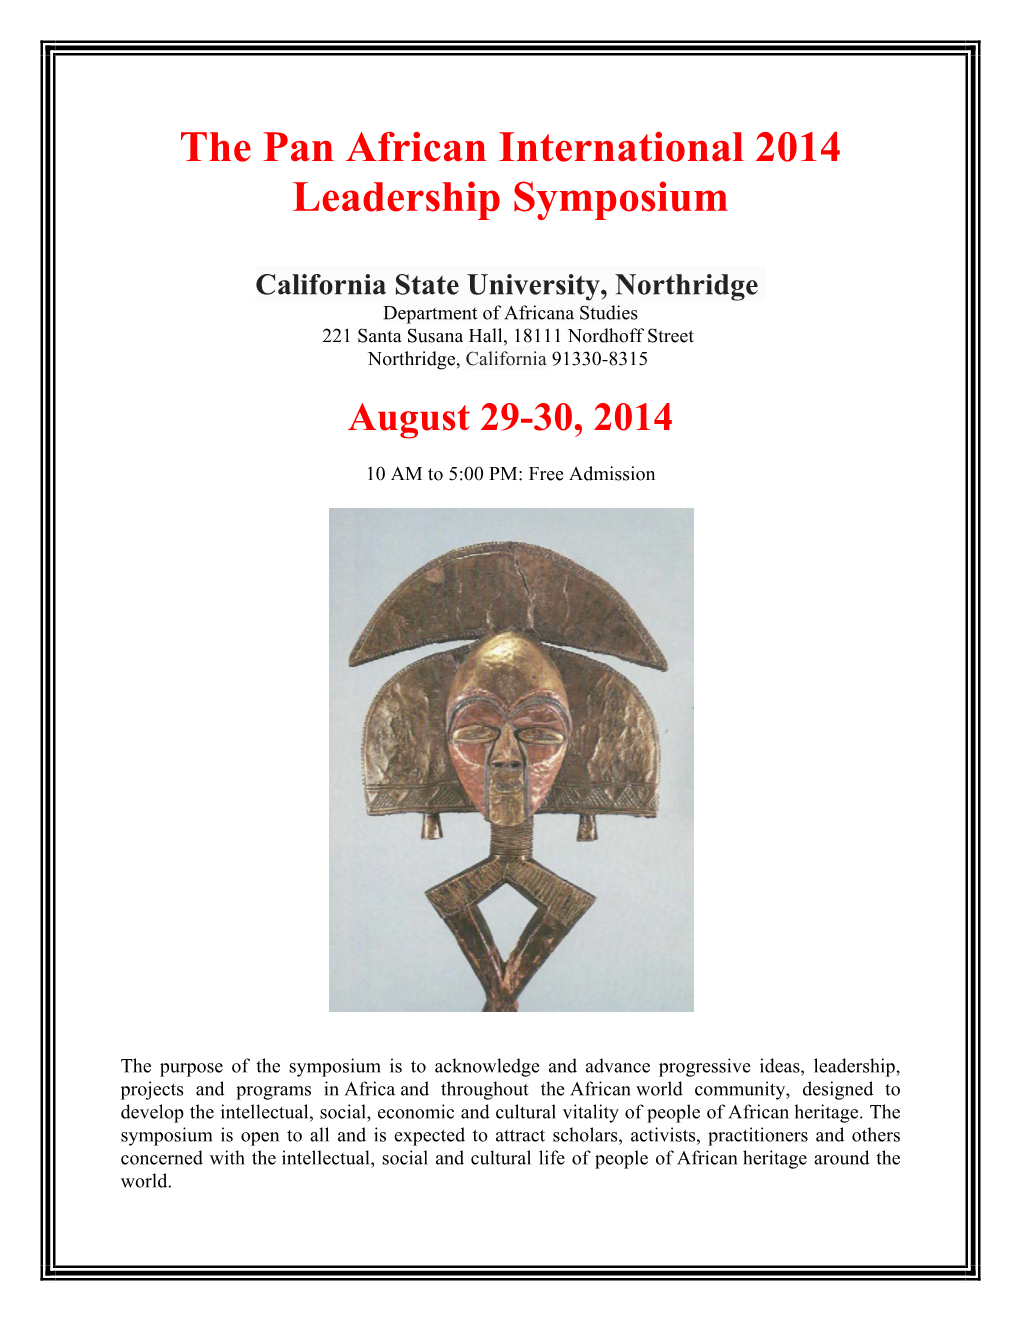 The Pan African International 2014 Leadership Symposium